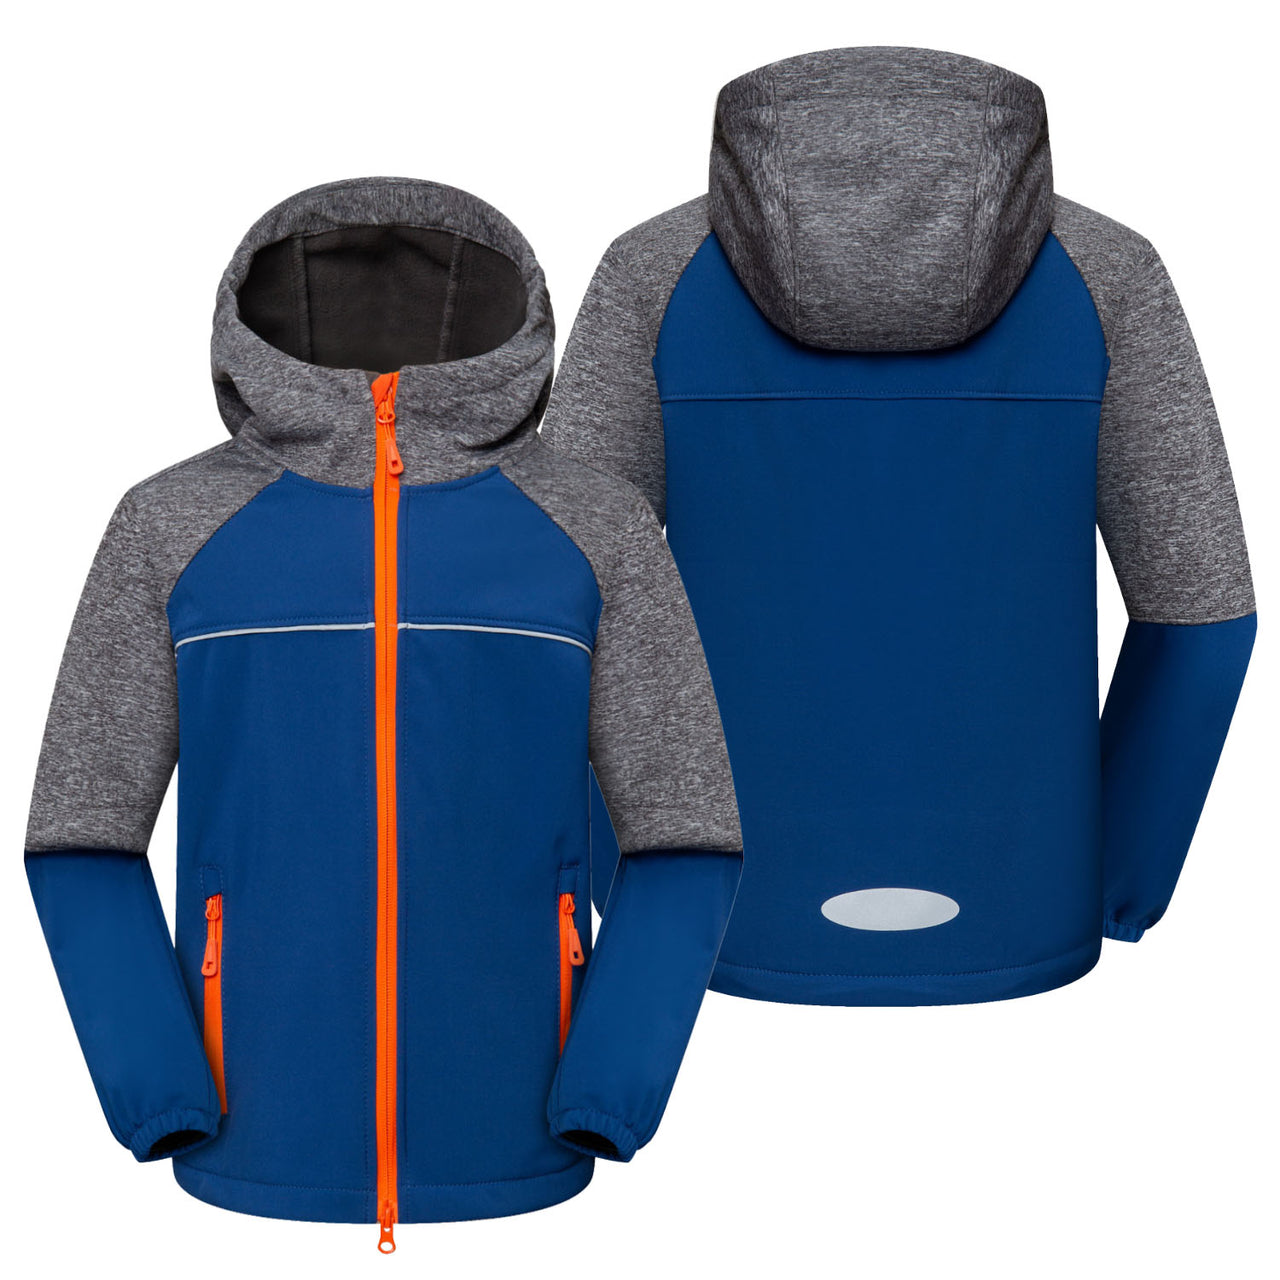 NO Design Super Quality Children Polar Style Jackets